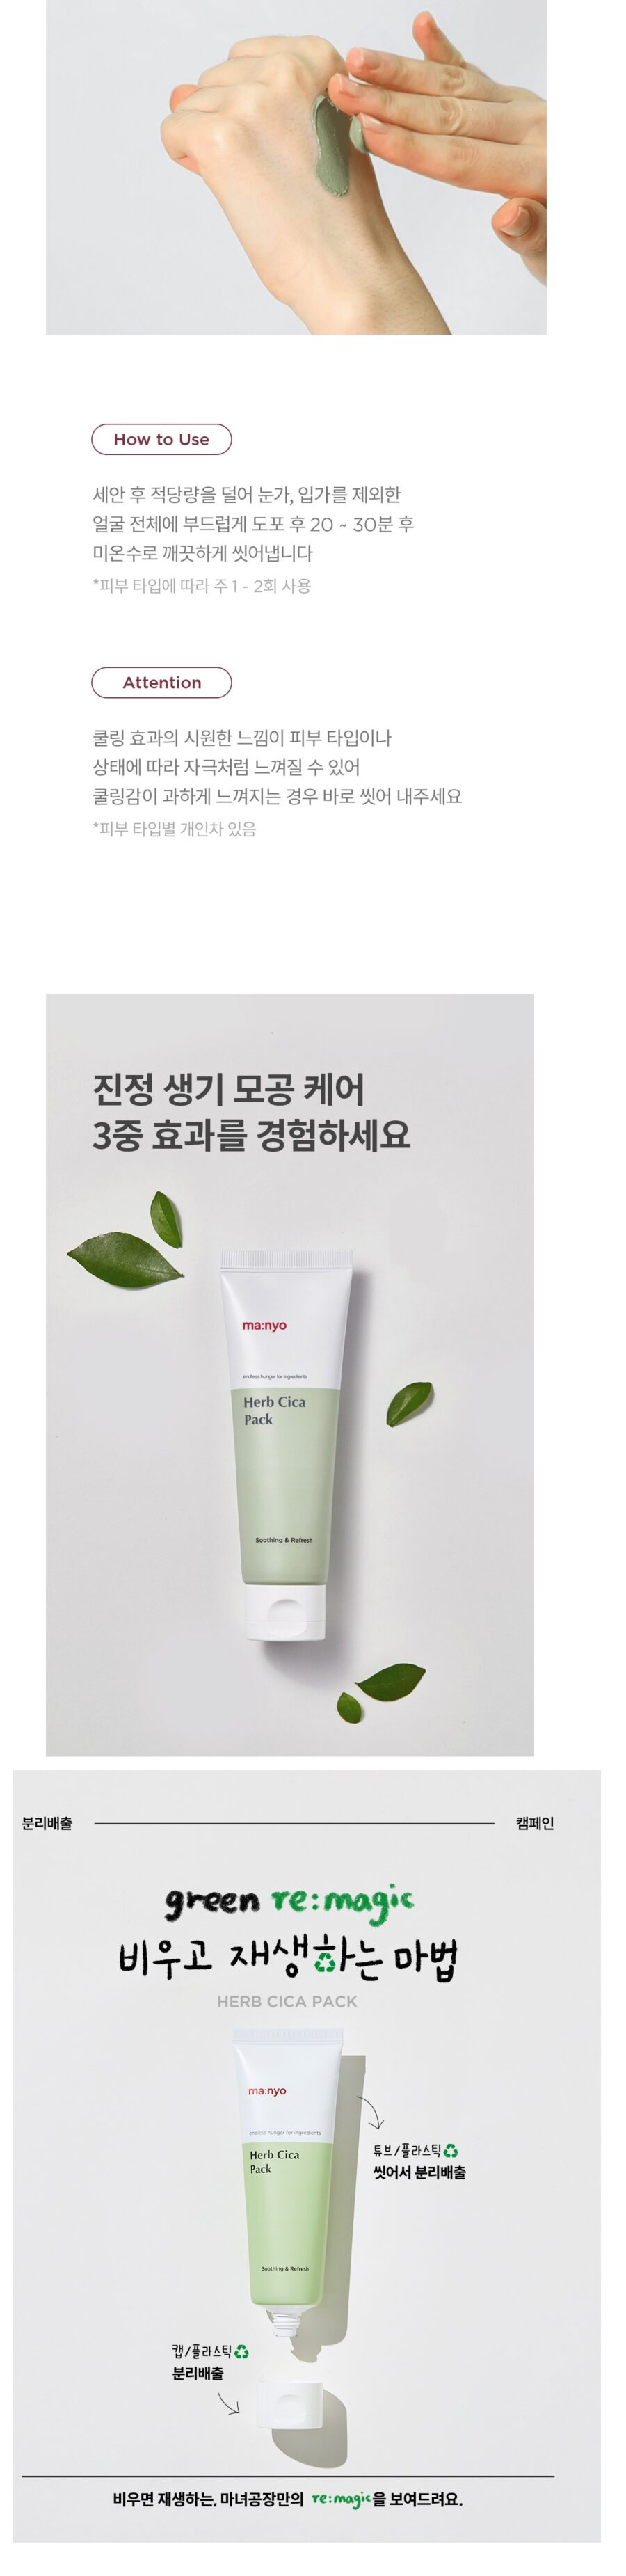 Manyo Factory Herb Cica Pack korean skincare product online shop malaysia macau poland3